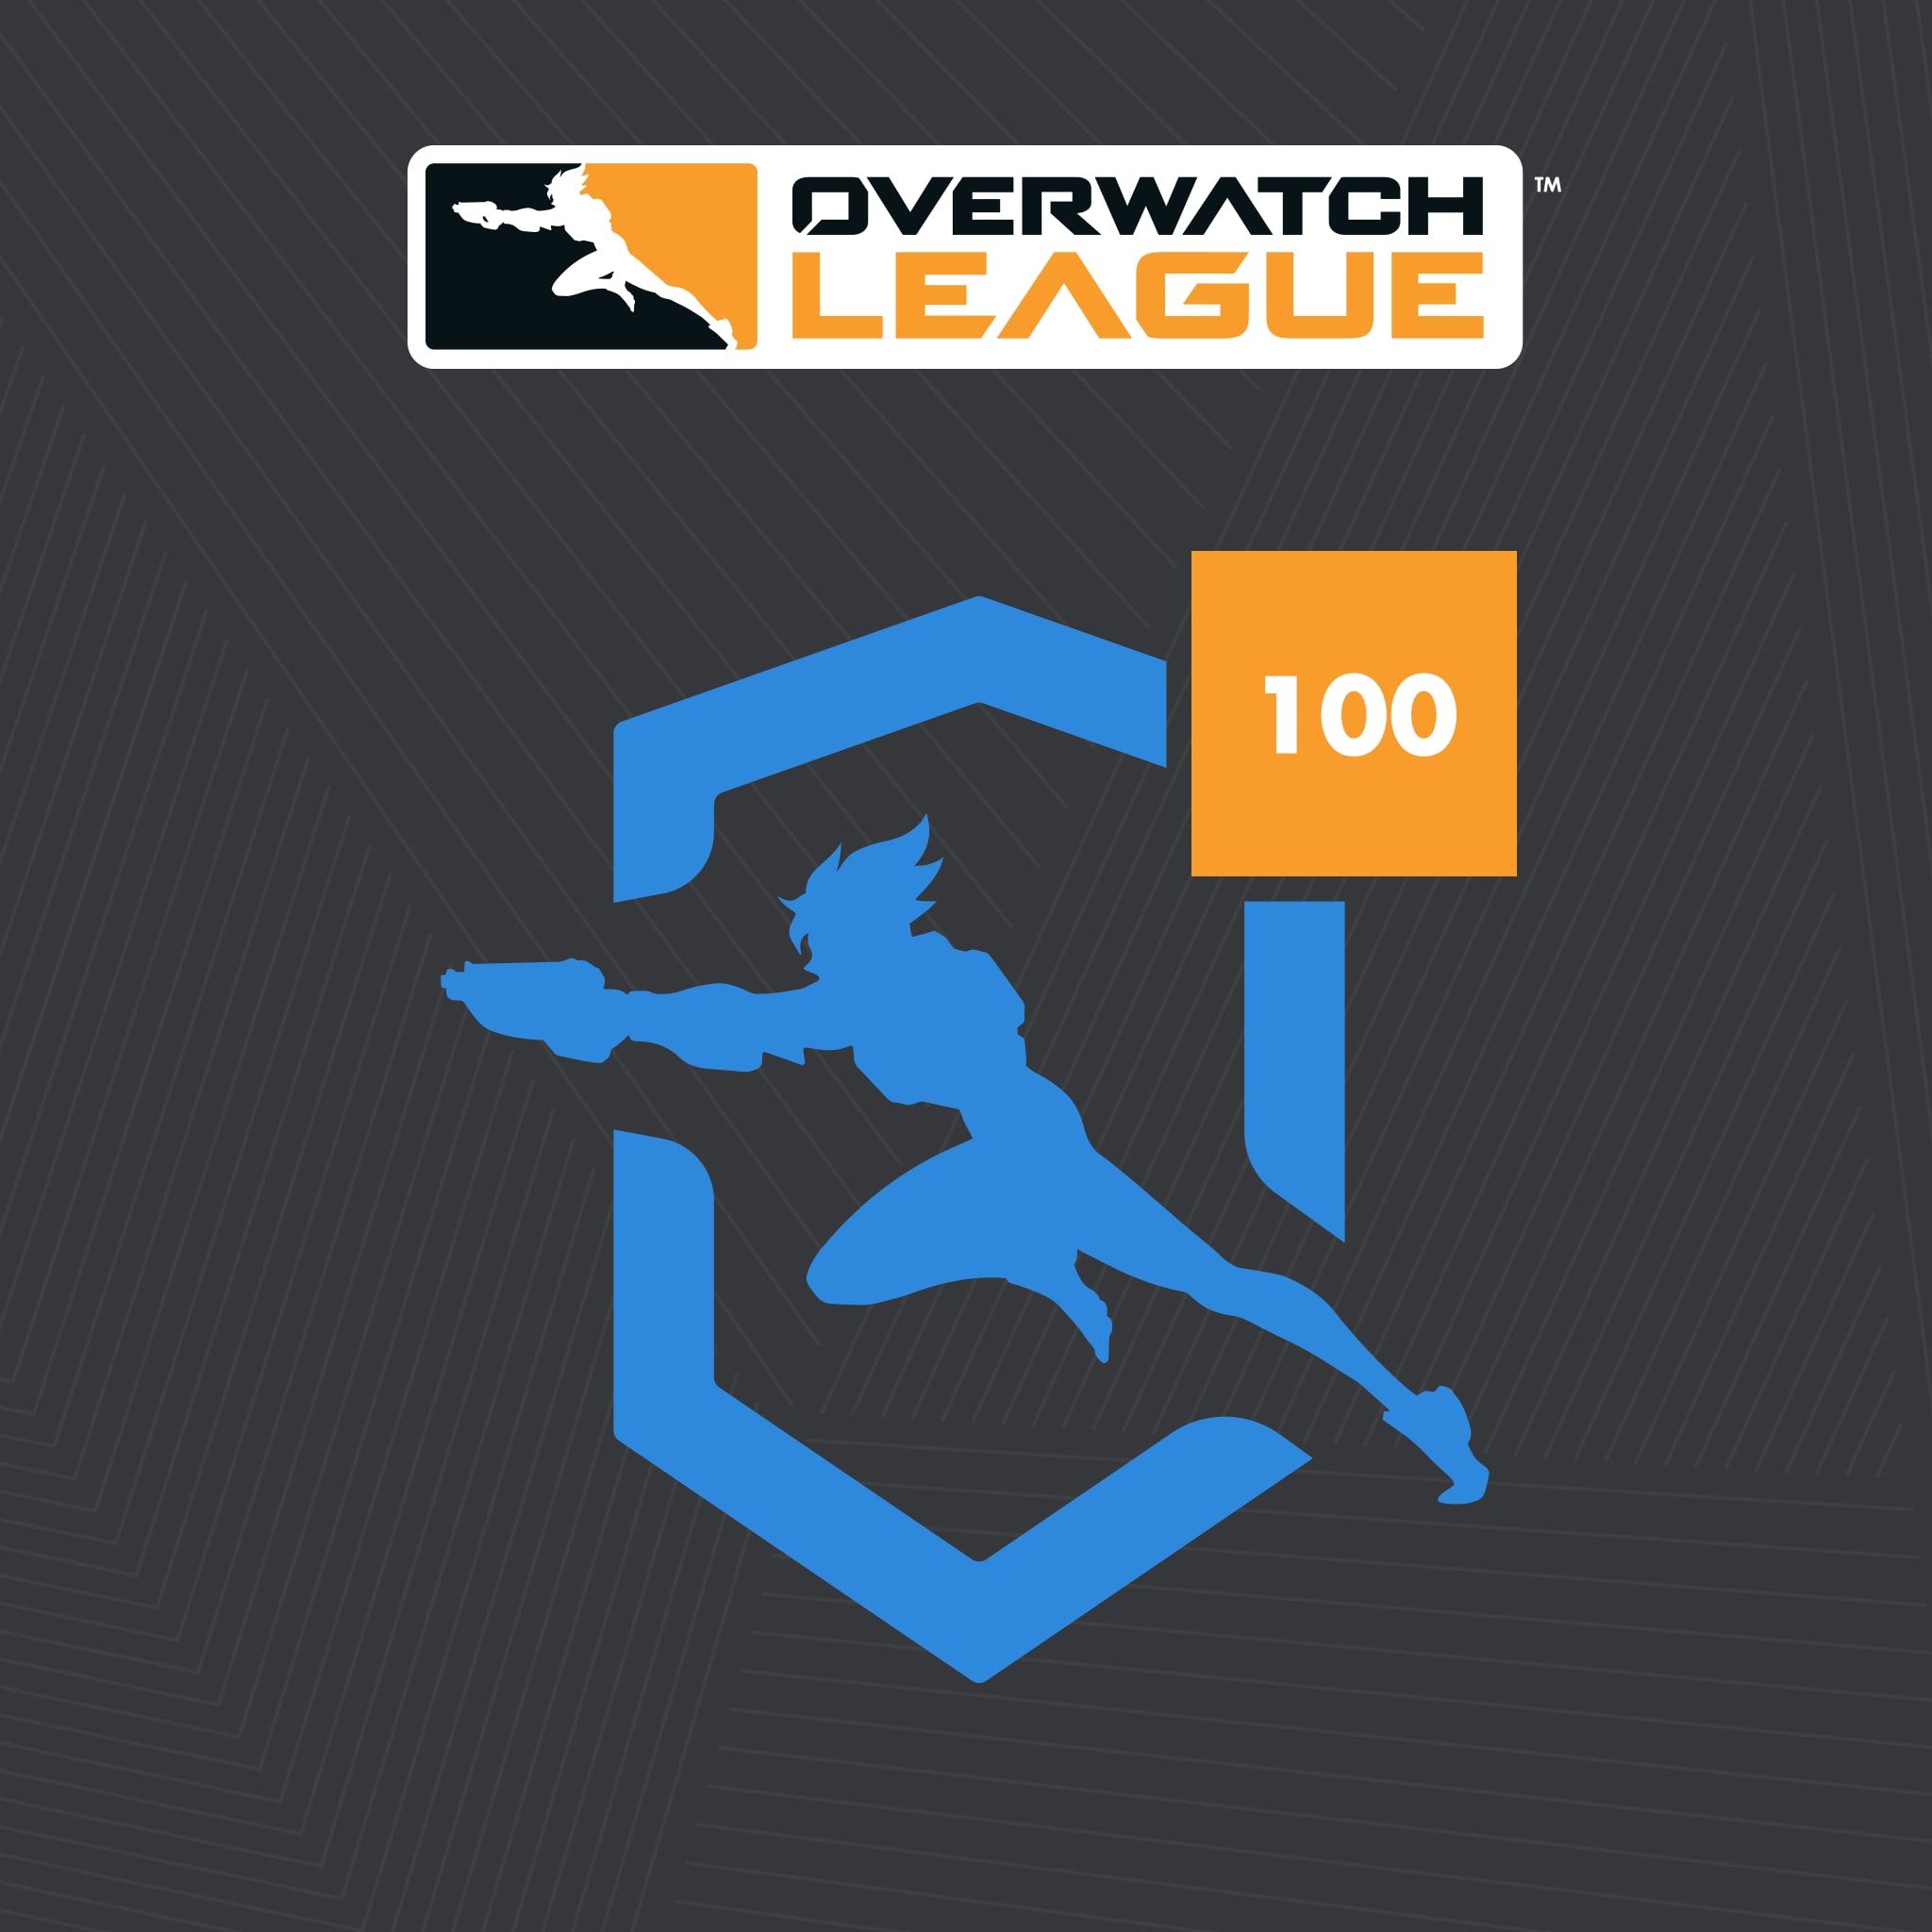 Overwatch League™ - 100 fichas de la OWL